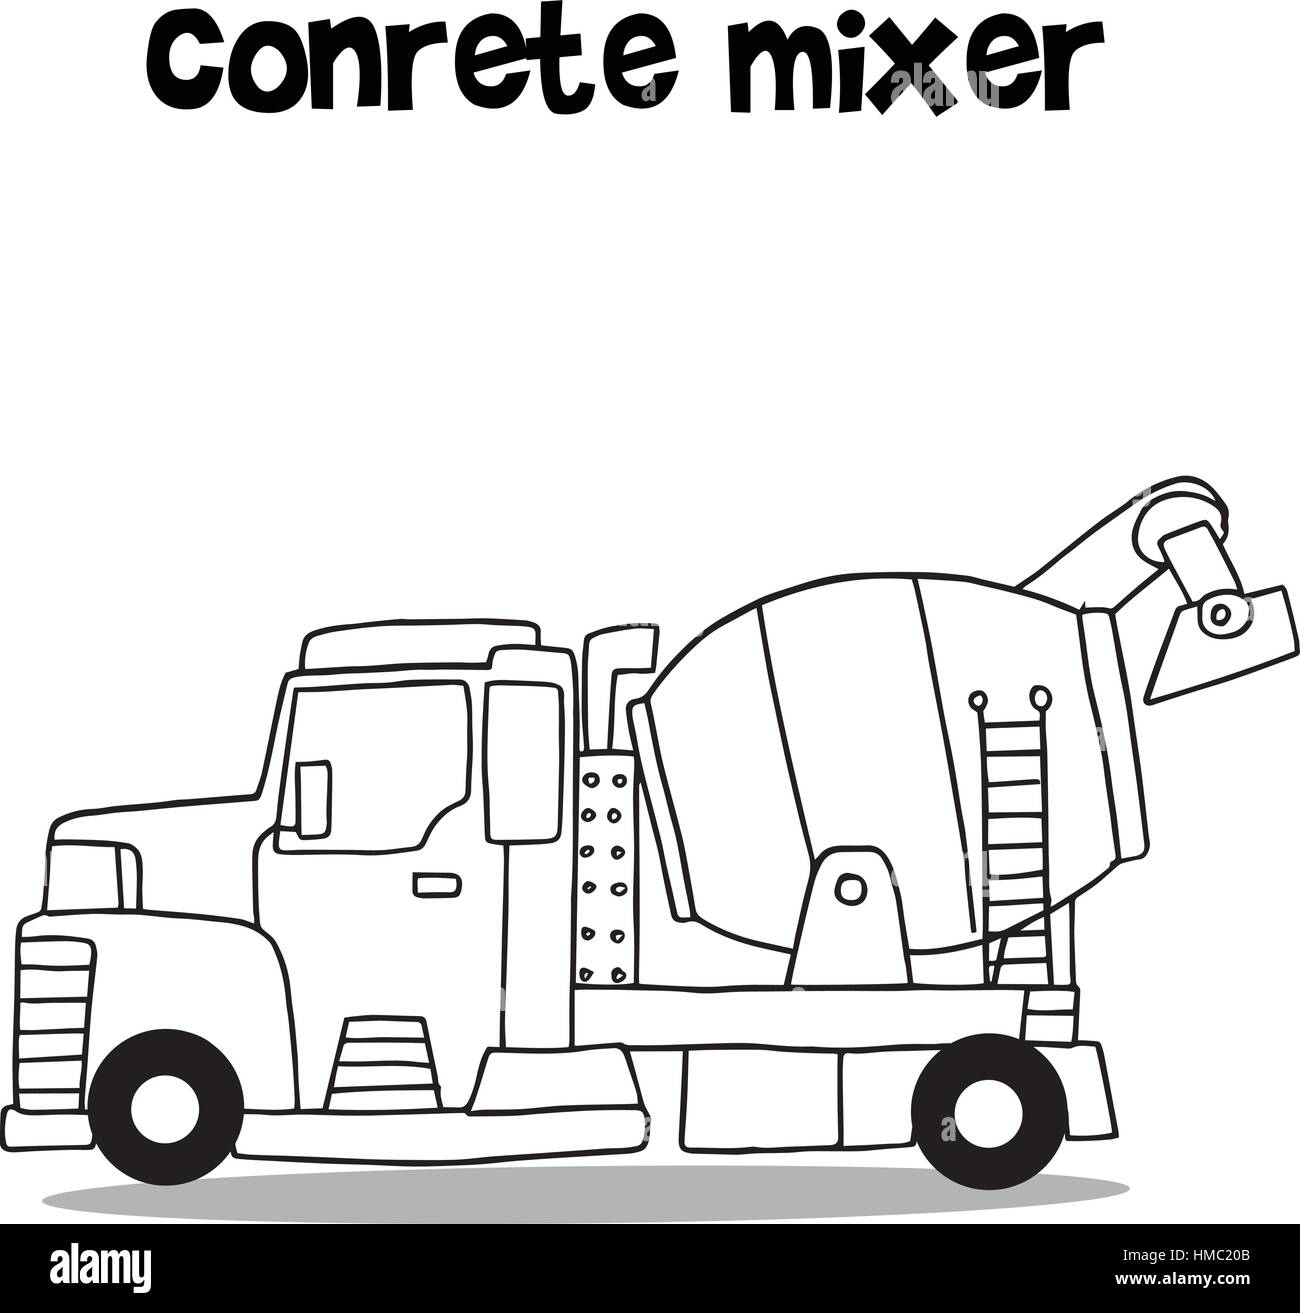 Concrete mixer truck sketch icon Royalty Free Vector Image